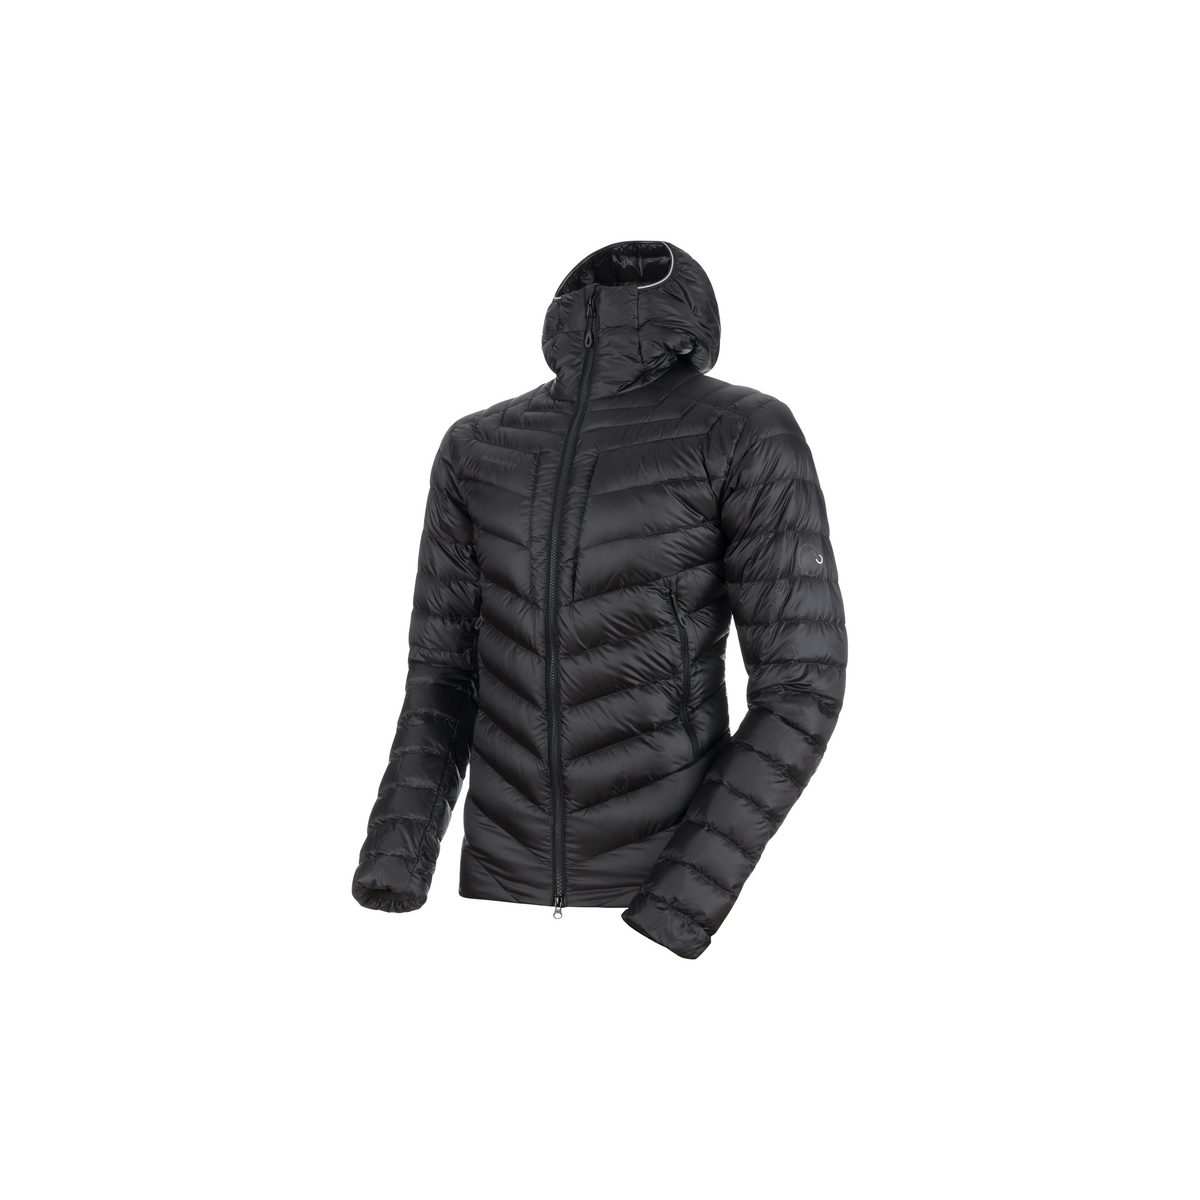 black down jacket with hood